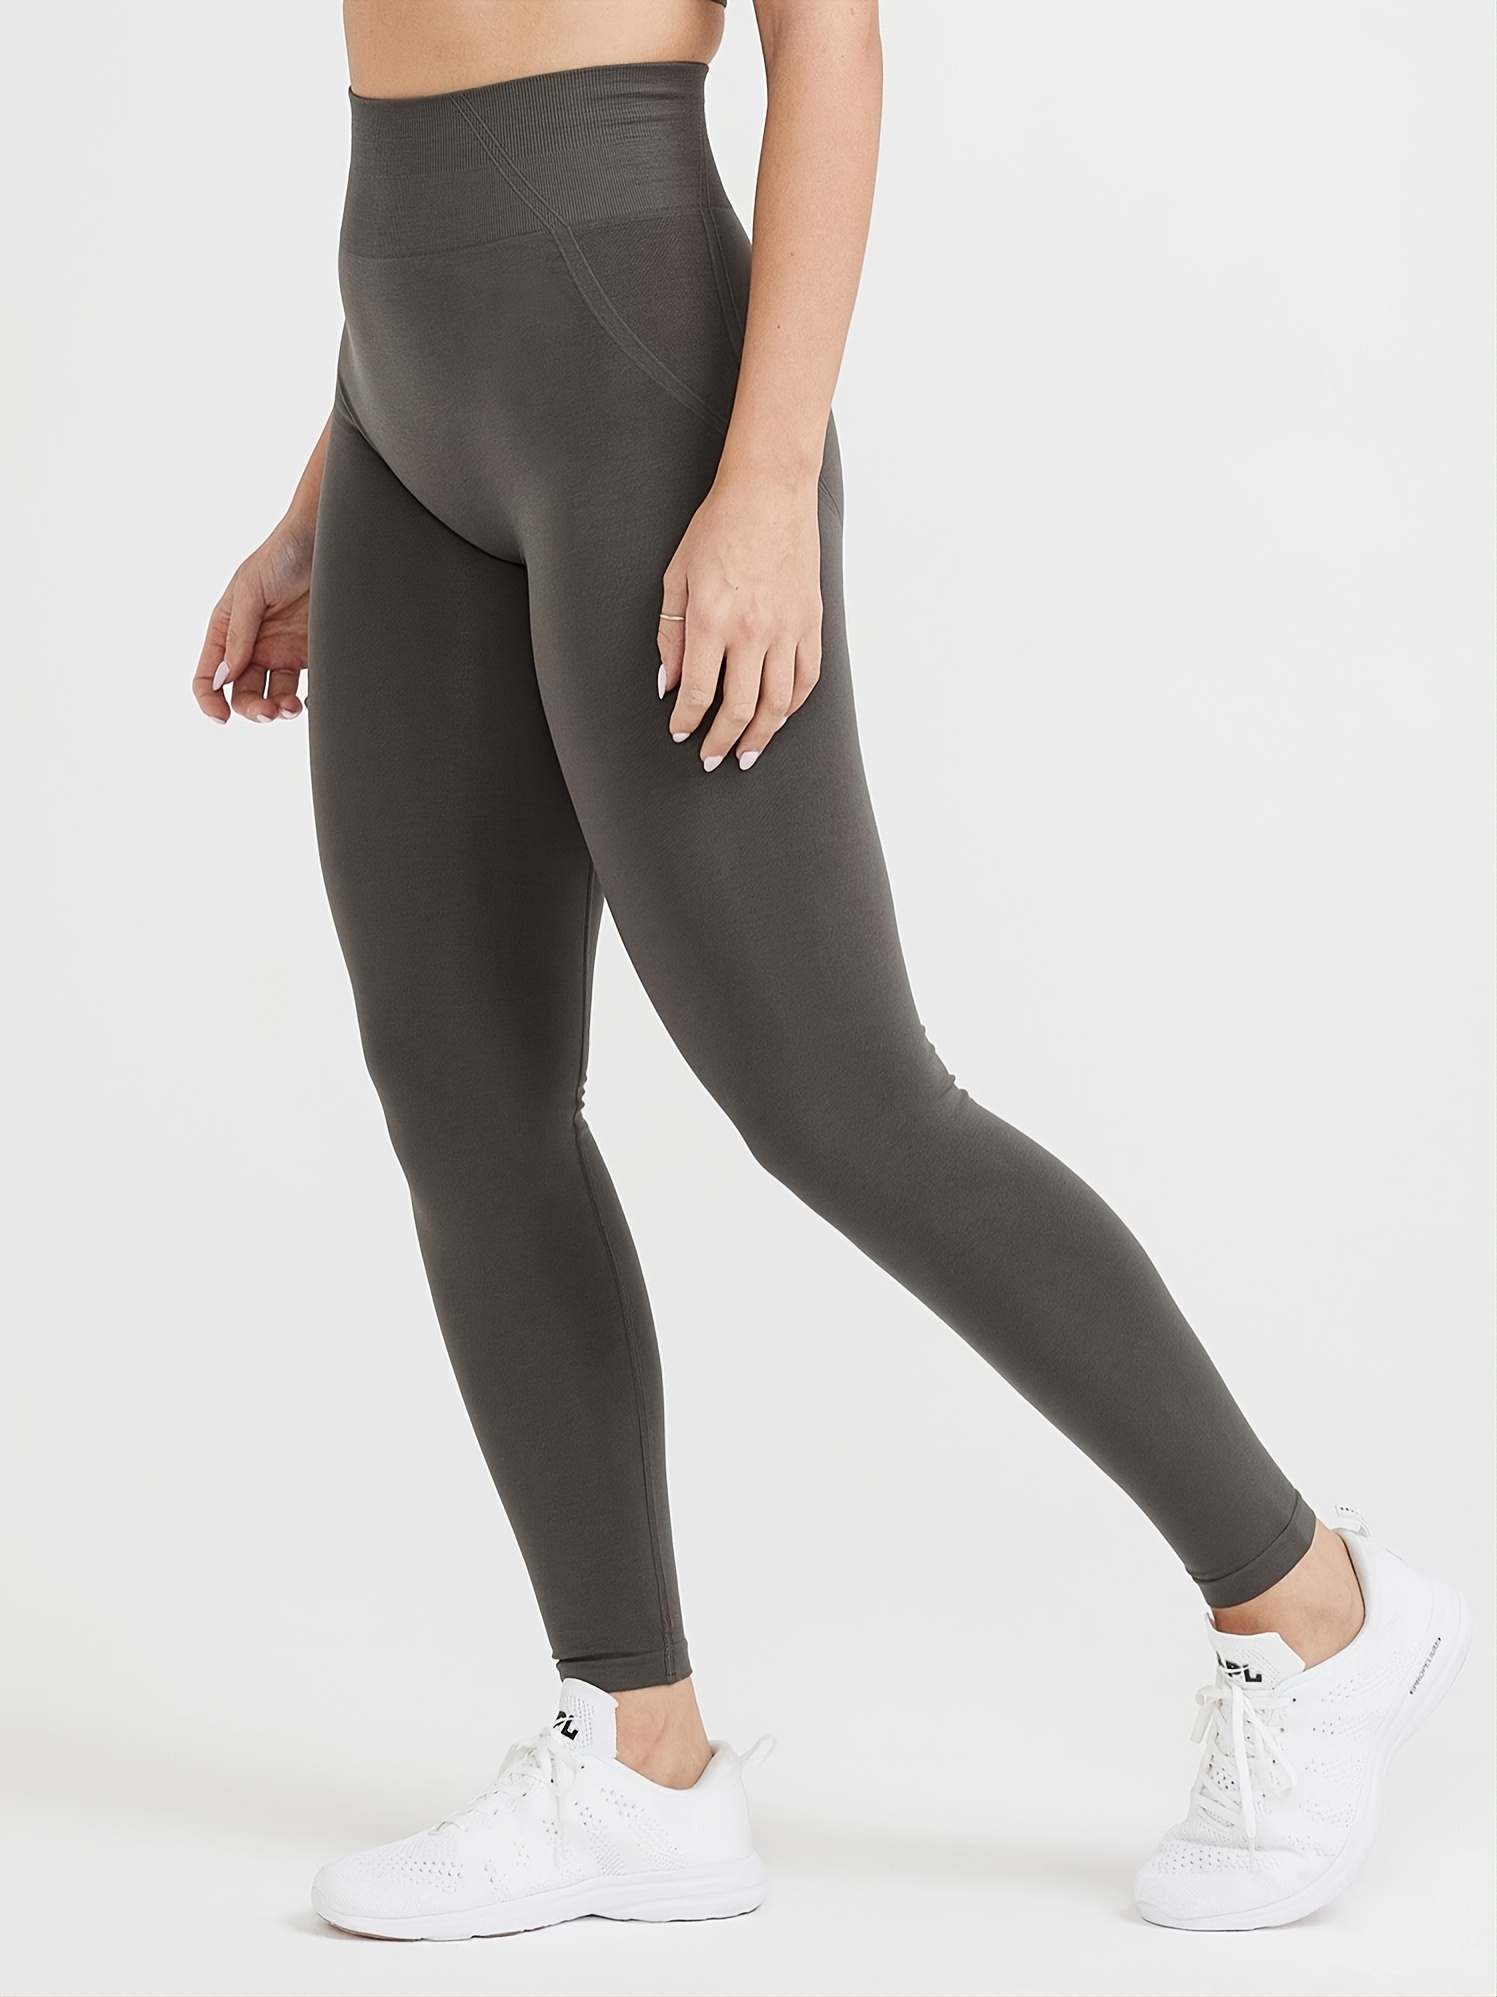 Women Oil Glossy Open Crotch Leggings Nylon Solid Color Sport Yoga